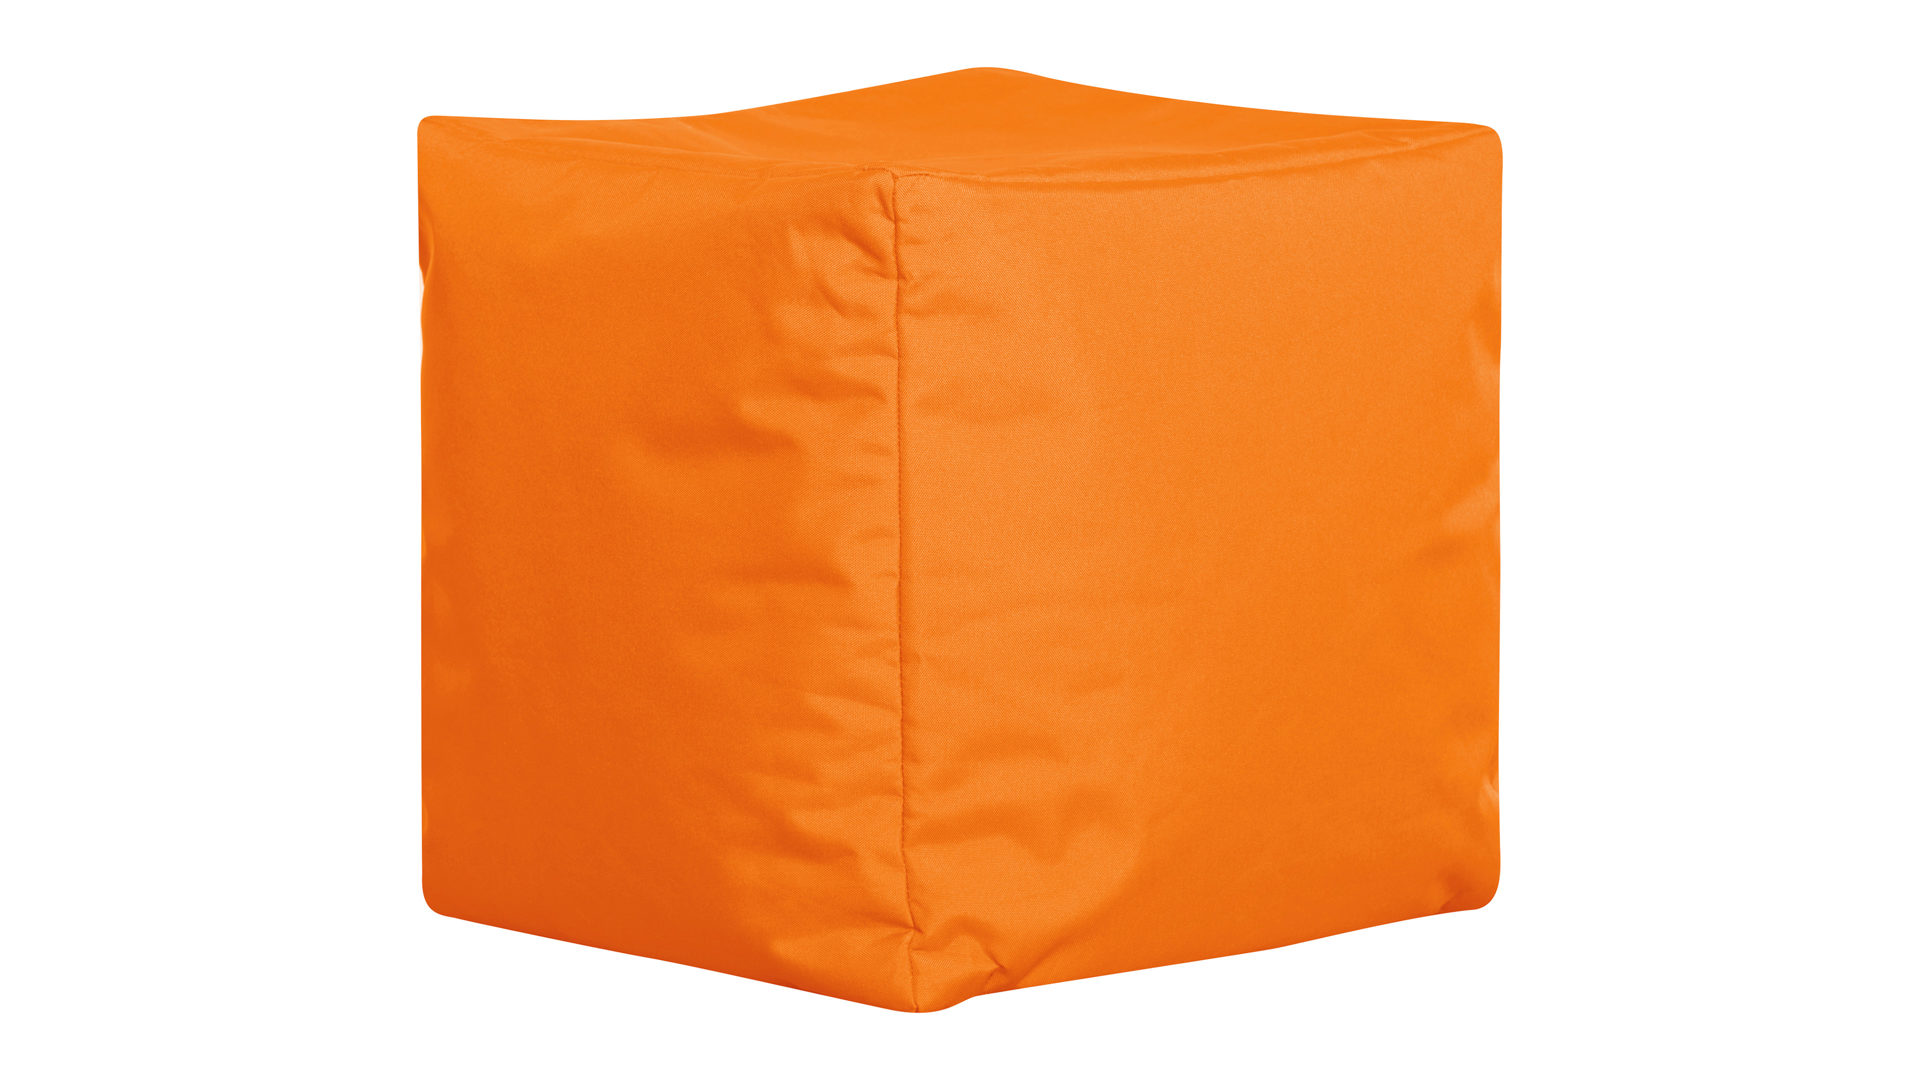 Sitzsack-Würfel Magma sitting point aus Stoff in Orange SITTING POINT Sitzwürfel Scuba Cube oranger Kunstfaserbezug - ca. 40 x 40 x 40 cm